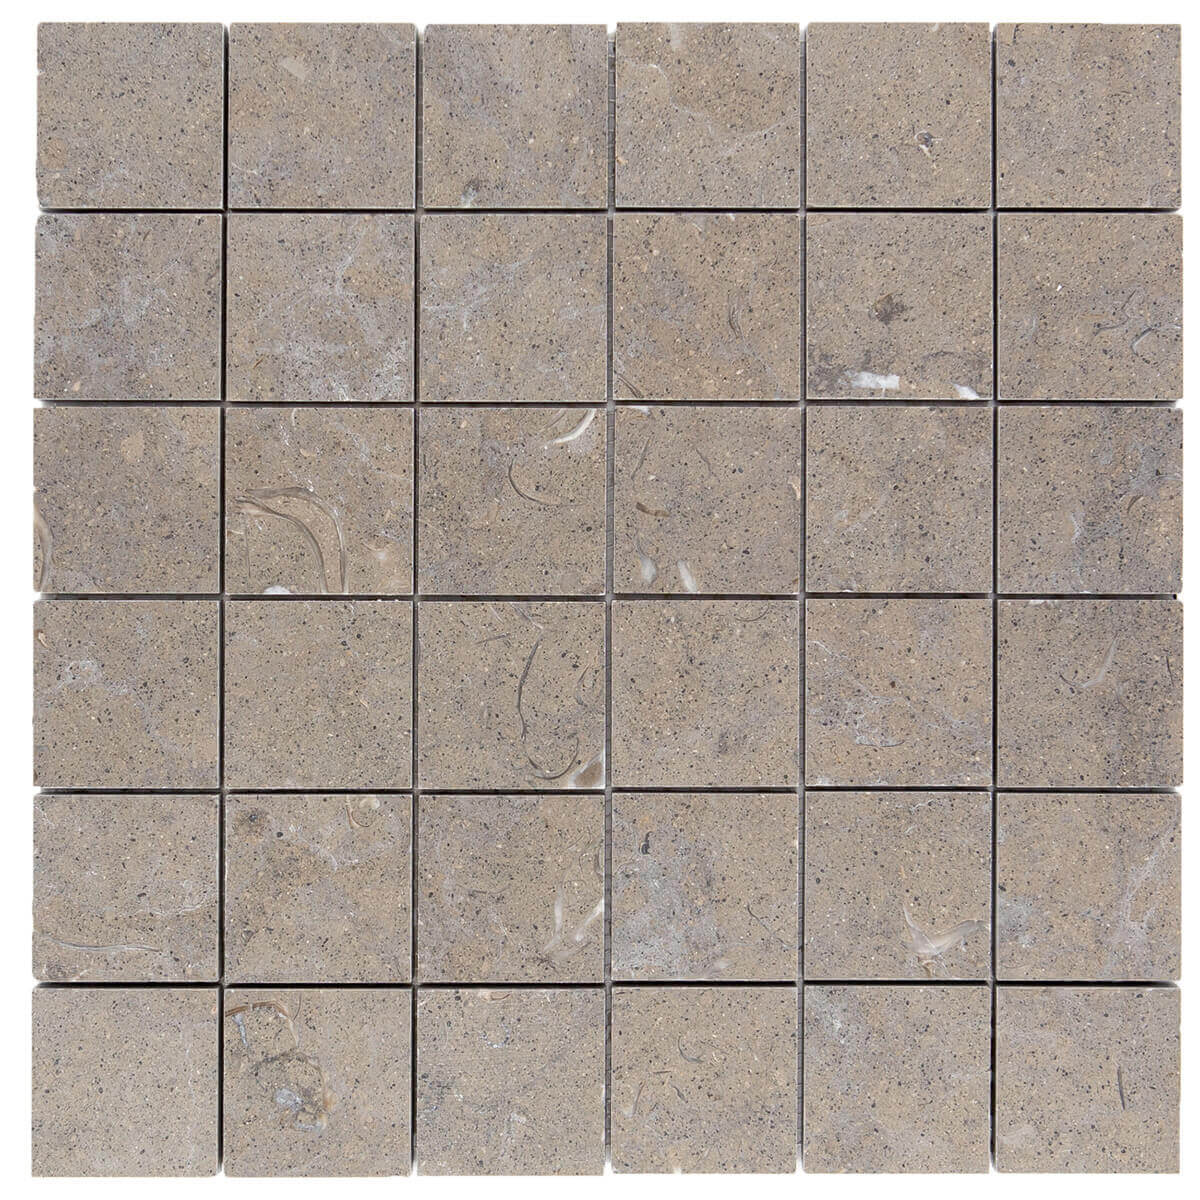 haussmann cote d azur limestone square mosaic tile 2x2 honed